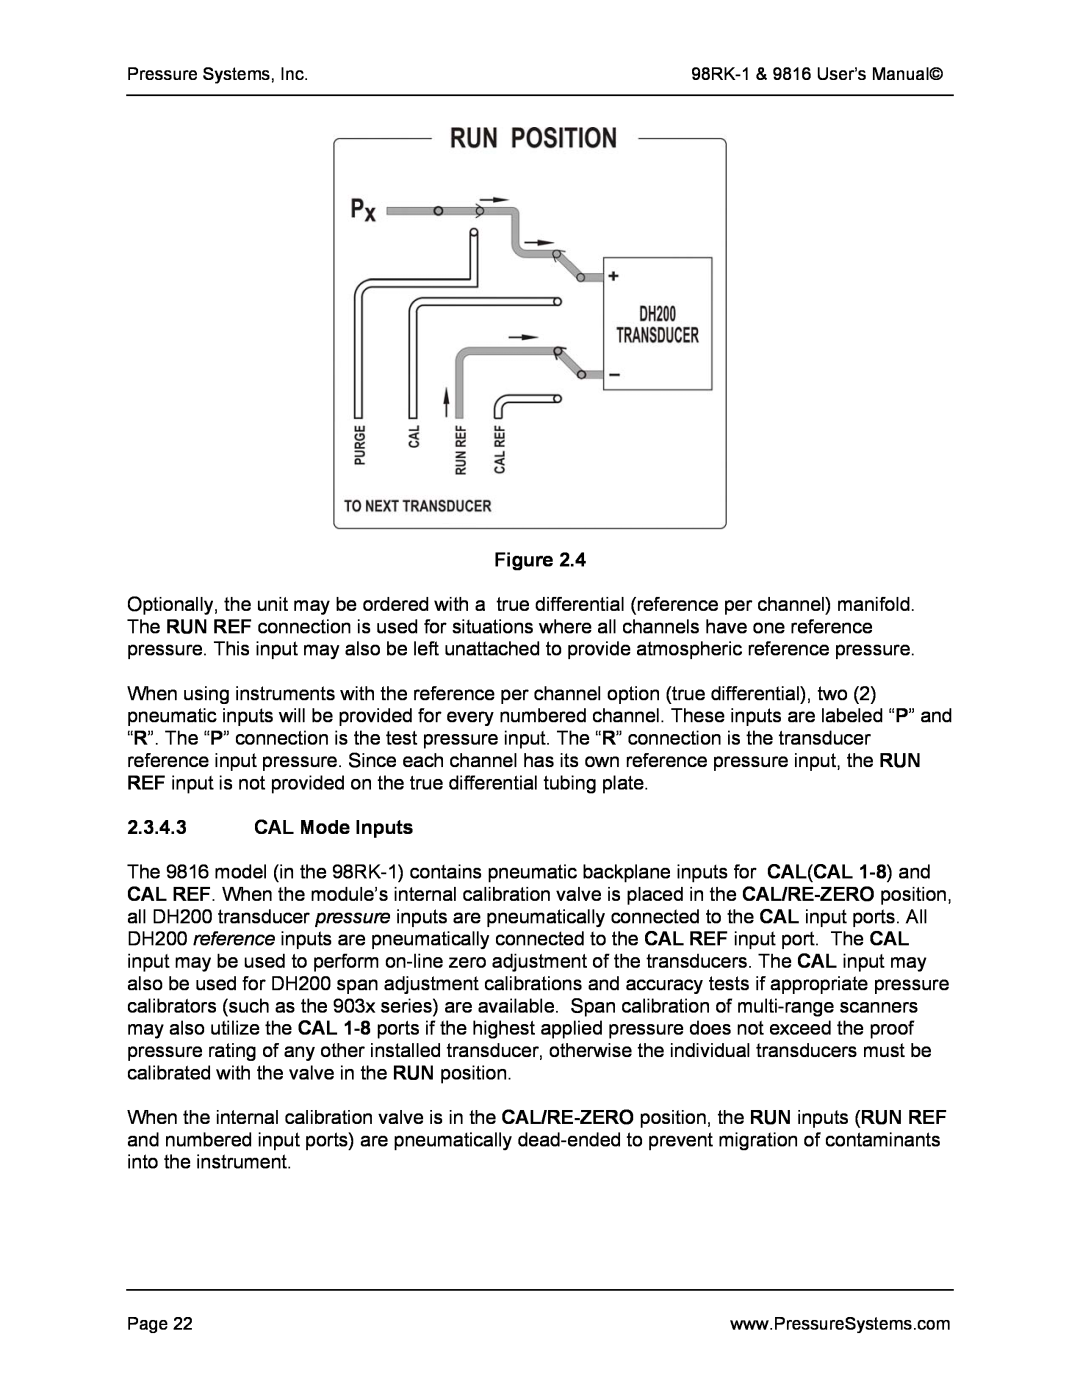 Pressure Systems 98RK-1 user manual CAL Mode Inputs 